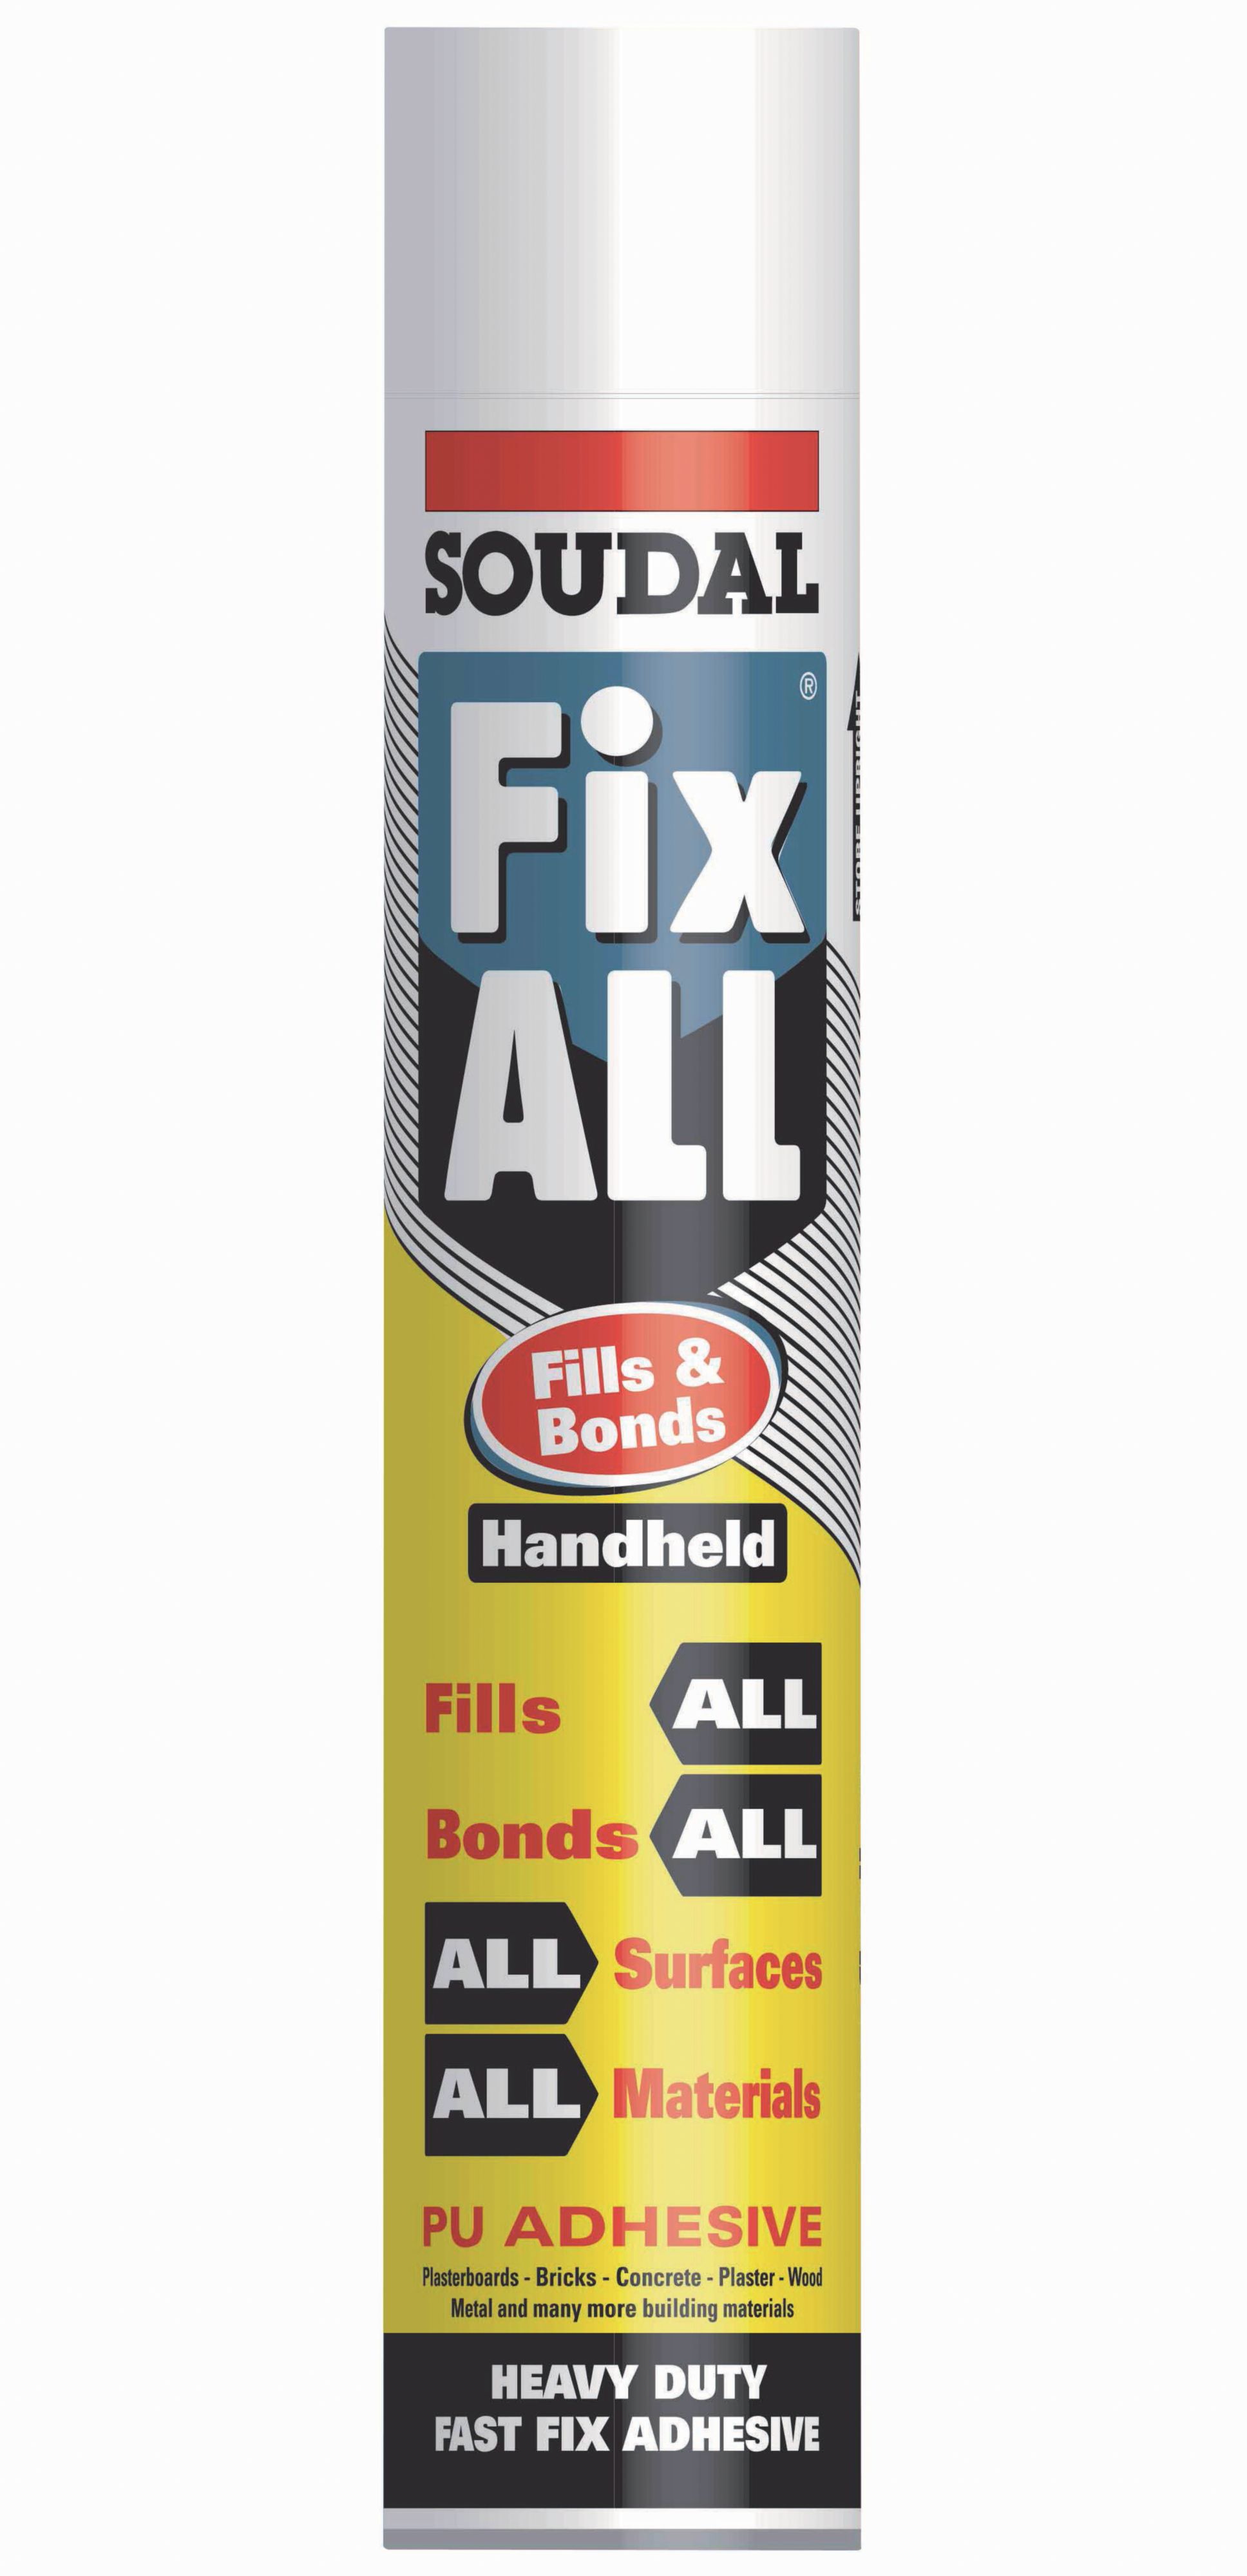 Soudal Fix ALL Fills & Bonds Hand-held Adhesive foam 750ml